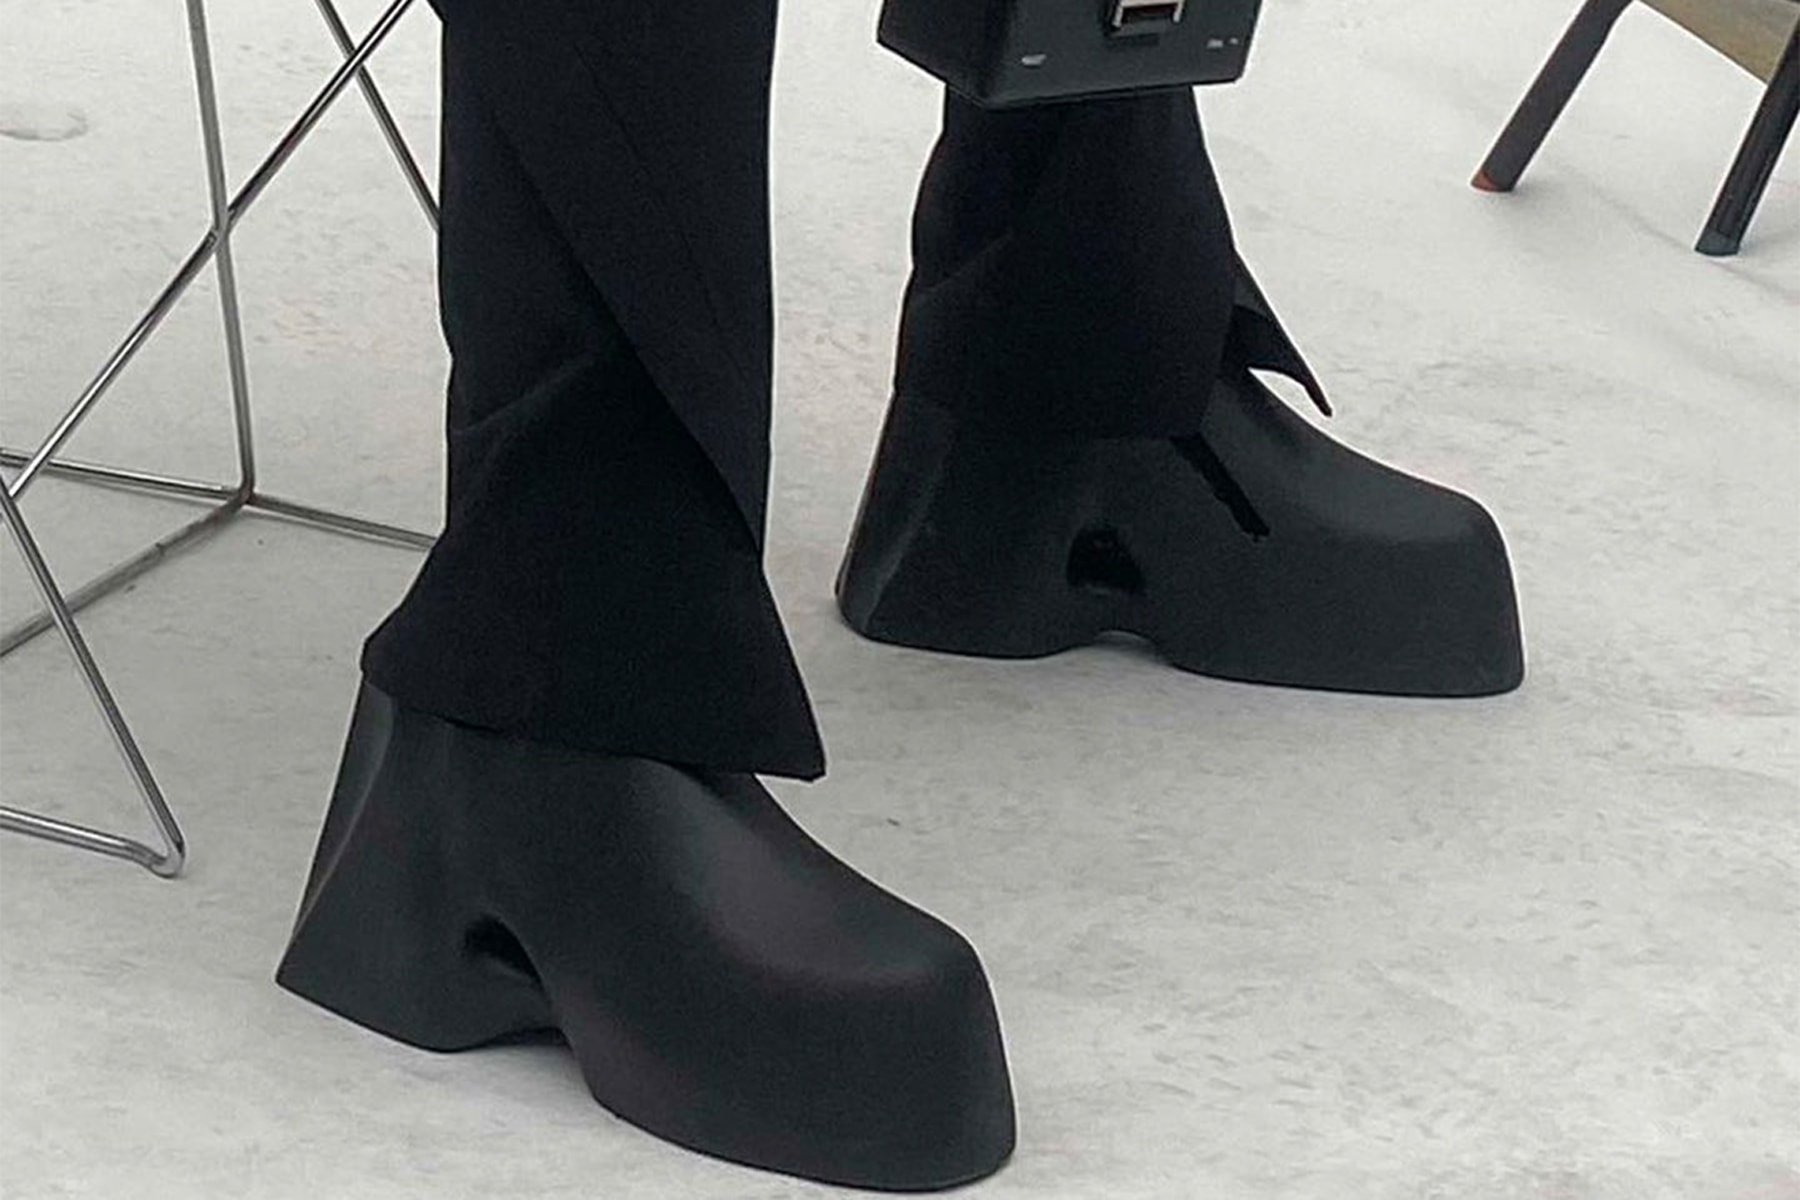 SCRY x HELIOT EMIL 全新聯名鞋款「Shadow」正式登場